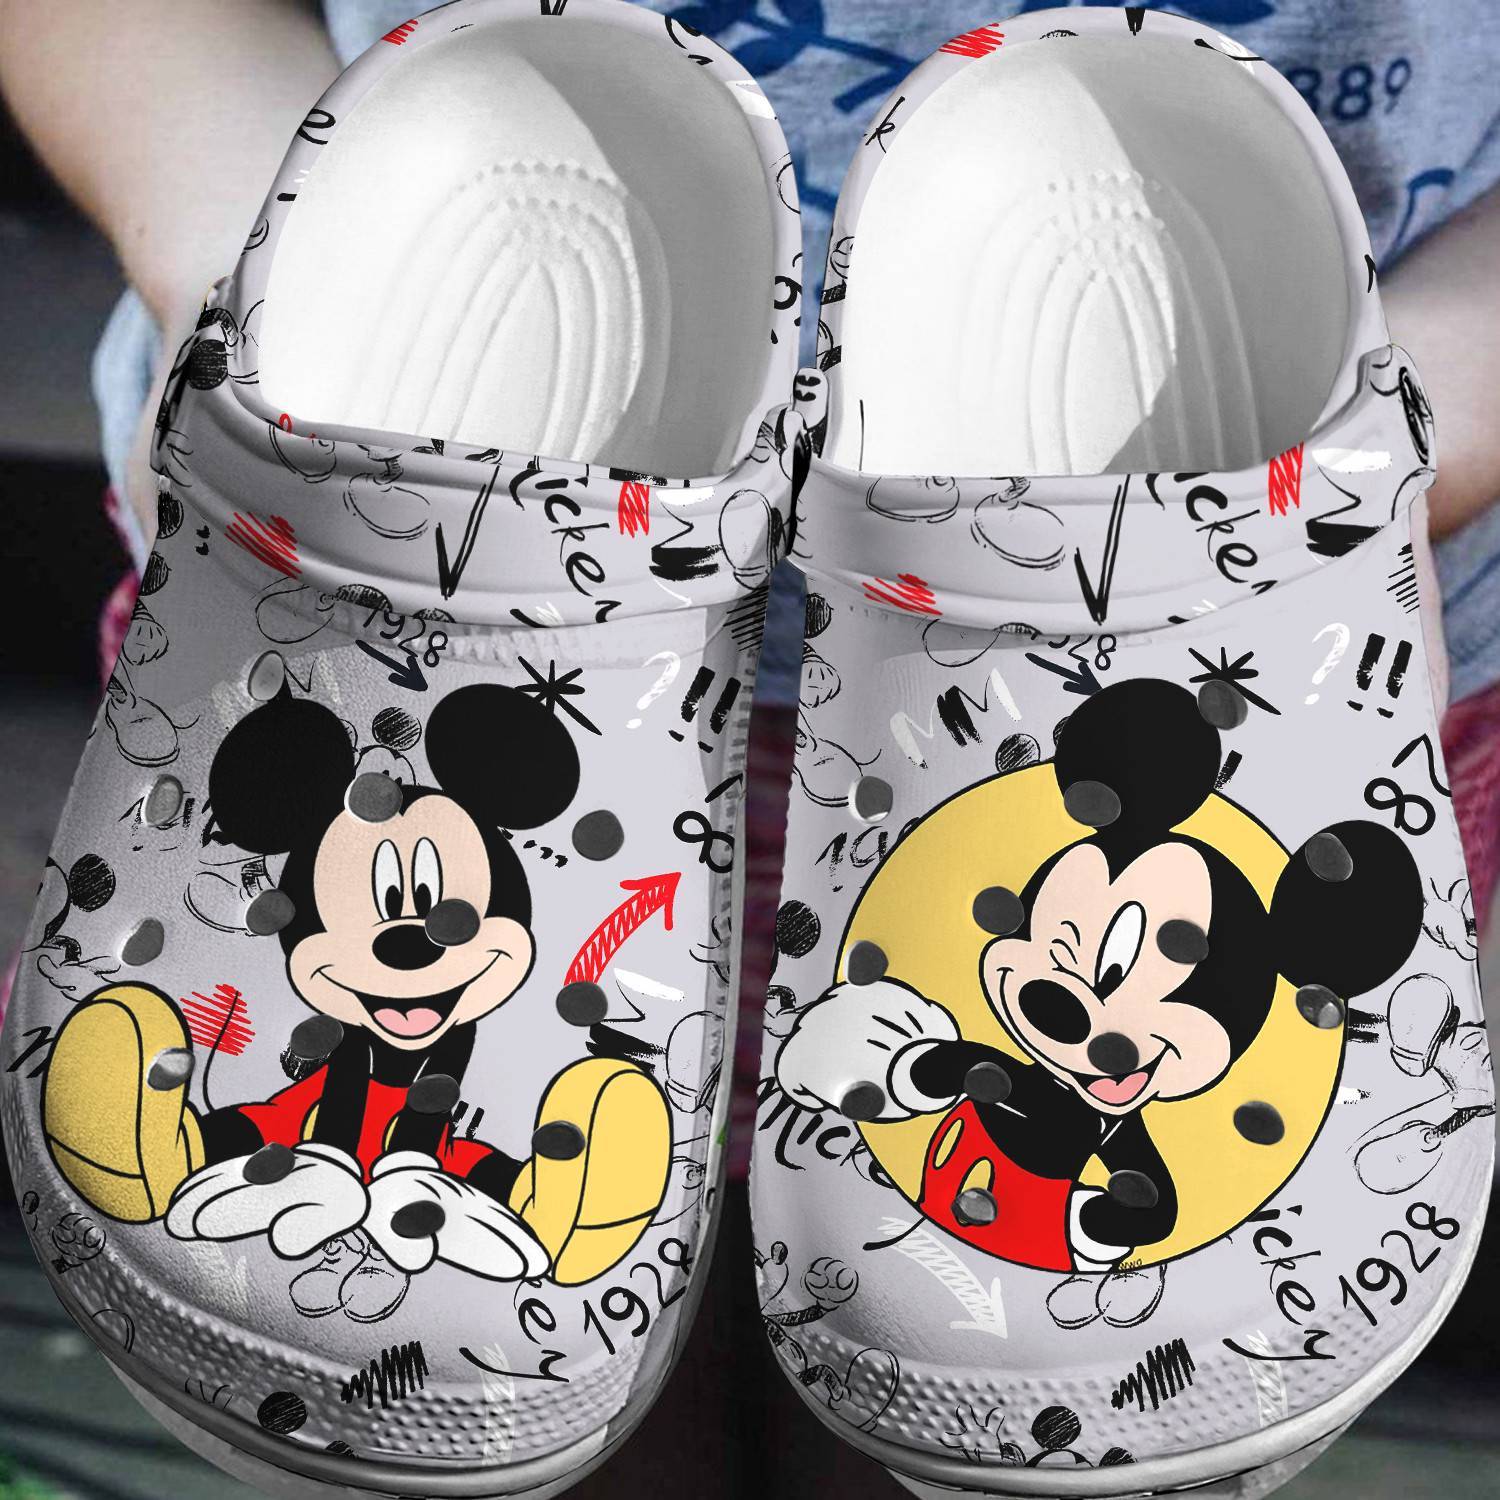 Disney Delight: Mickey Mouse Crocs Classic Clogs